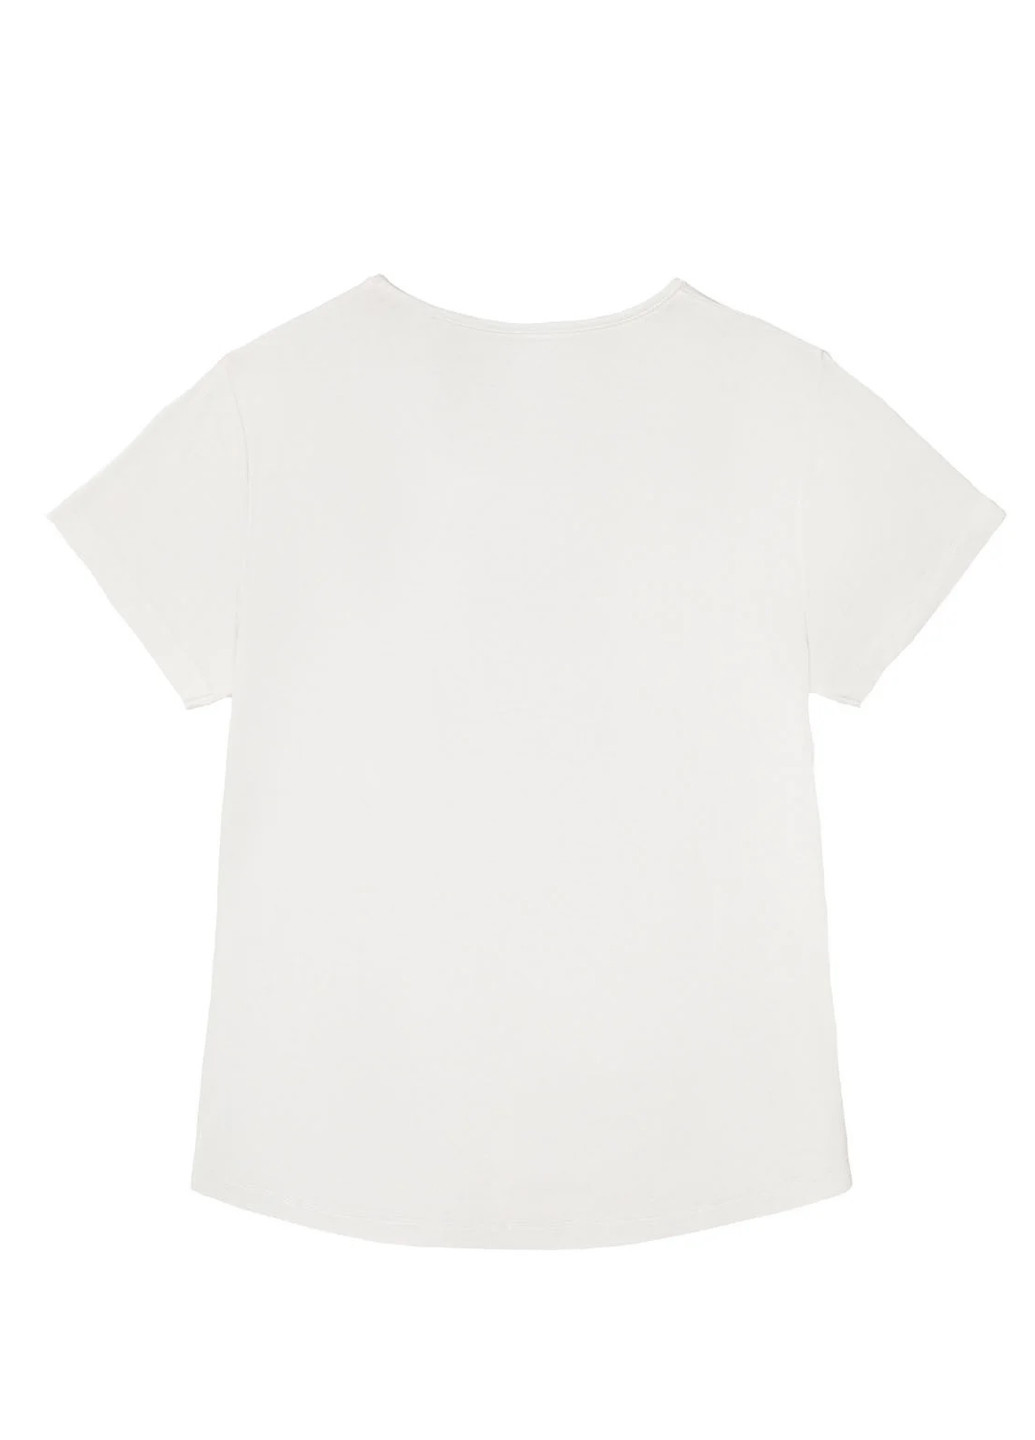 Черно-белая всесезон пижама (футболка, брюки) футболка + брюки Esmara